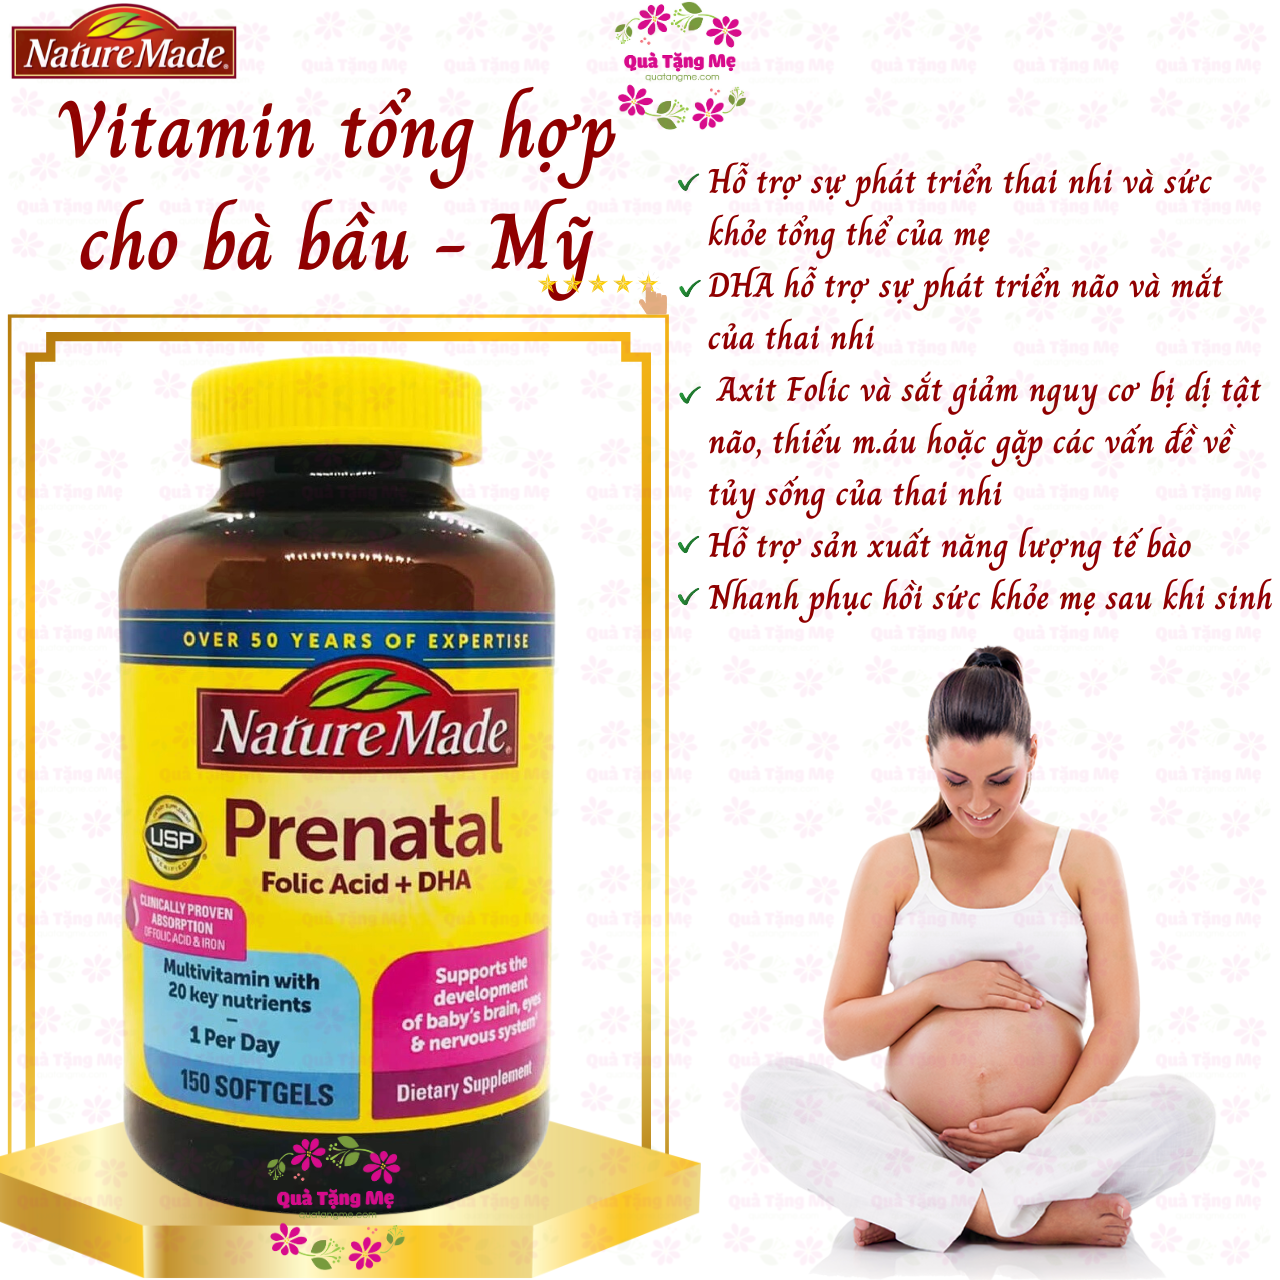 vitamin-tong-hop-cho-ba-bau-nature-made-prenatal-folic-acid-dha-150-vien-qua-tang-me